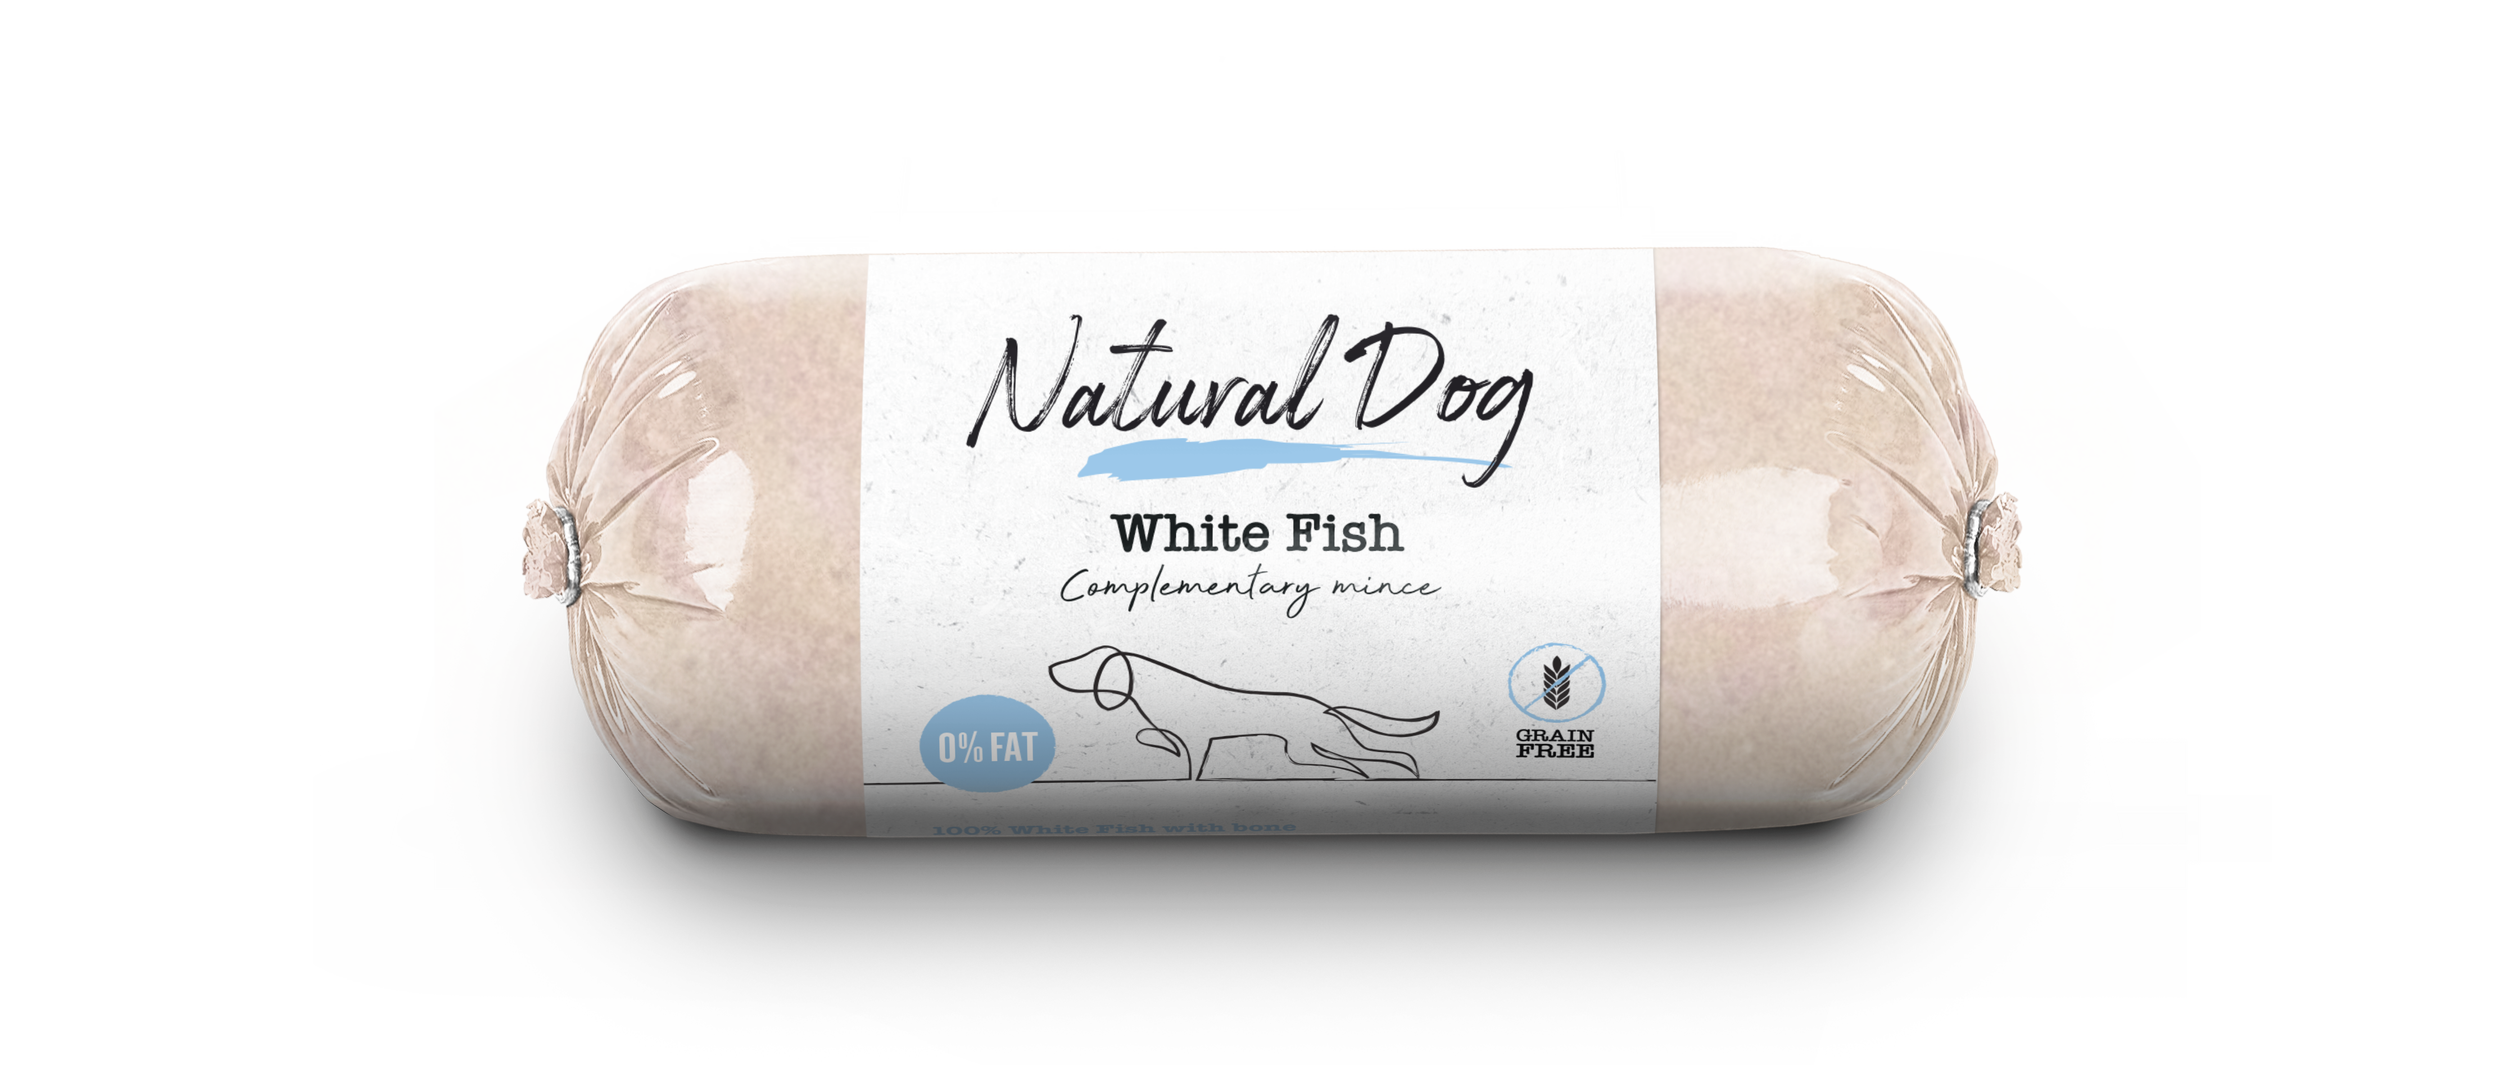 Natural Dog_Top down chub roll_White Fish.png